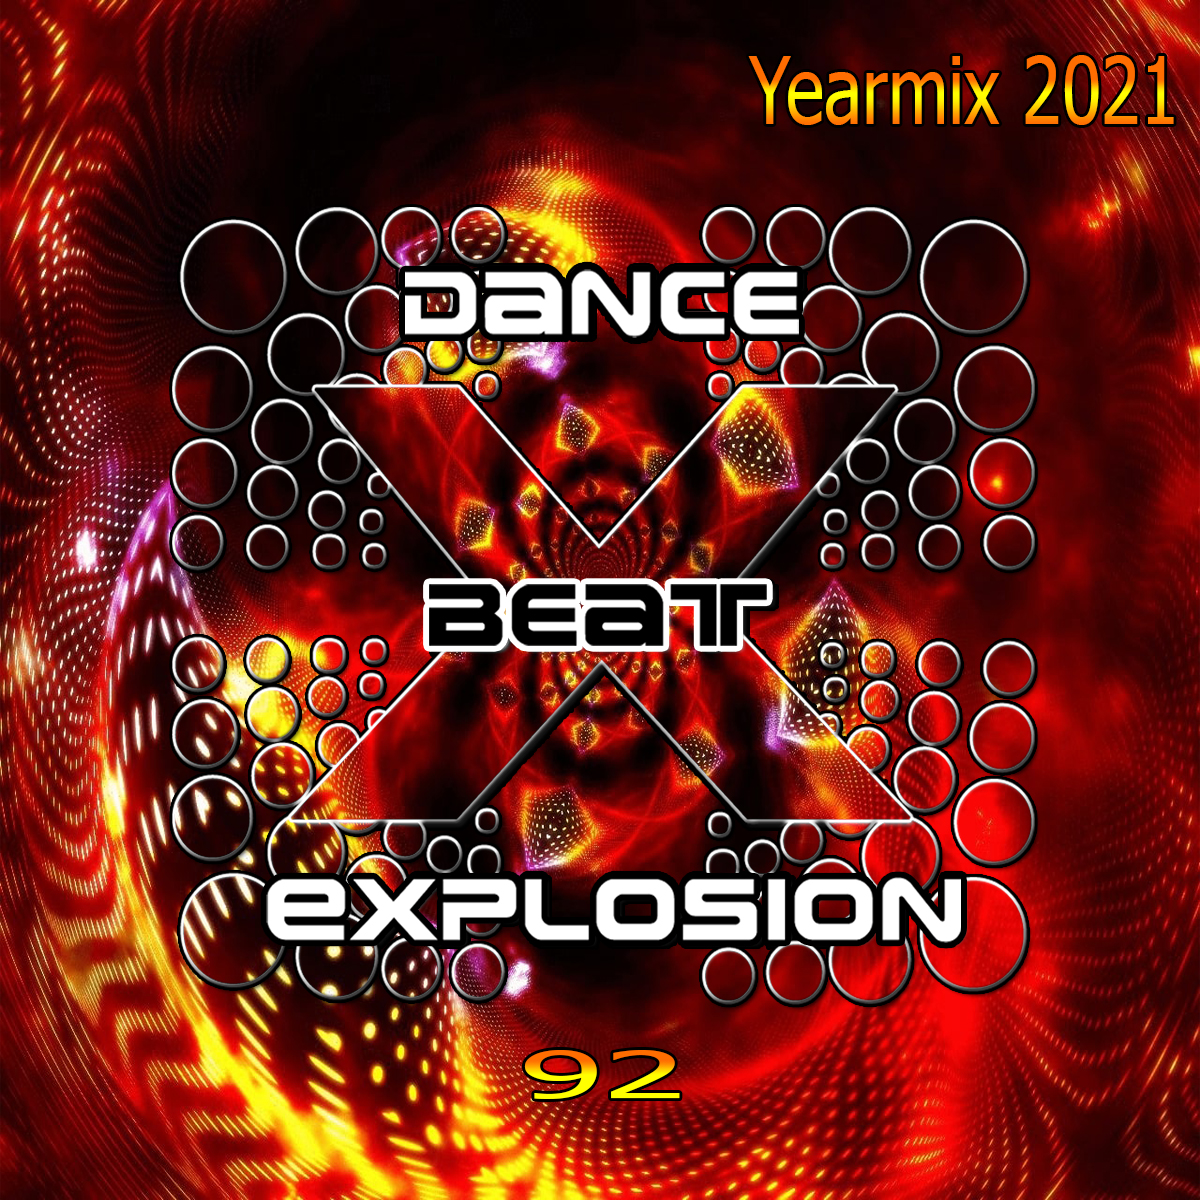 Dance Beat Explosion 92 (Yearmix 2021)